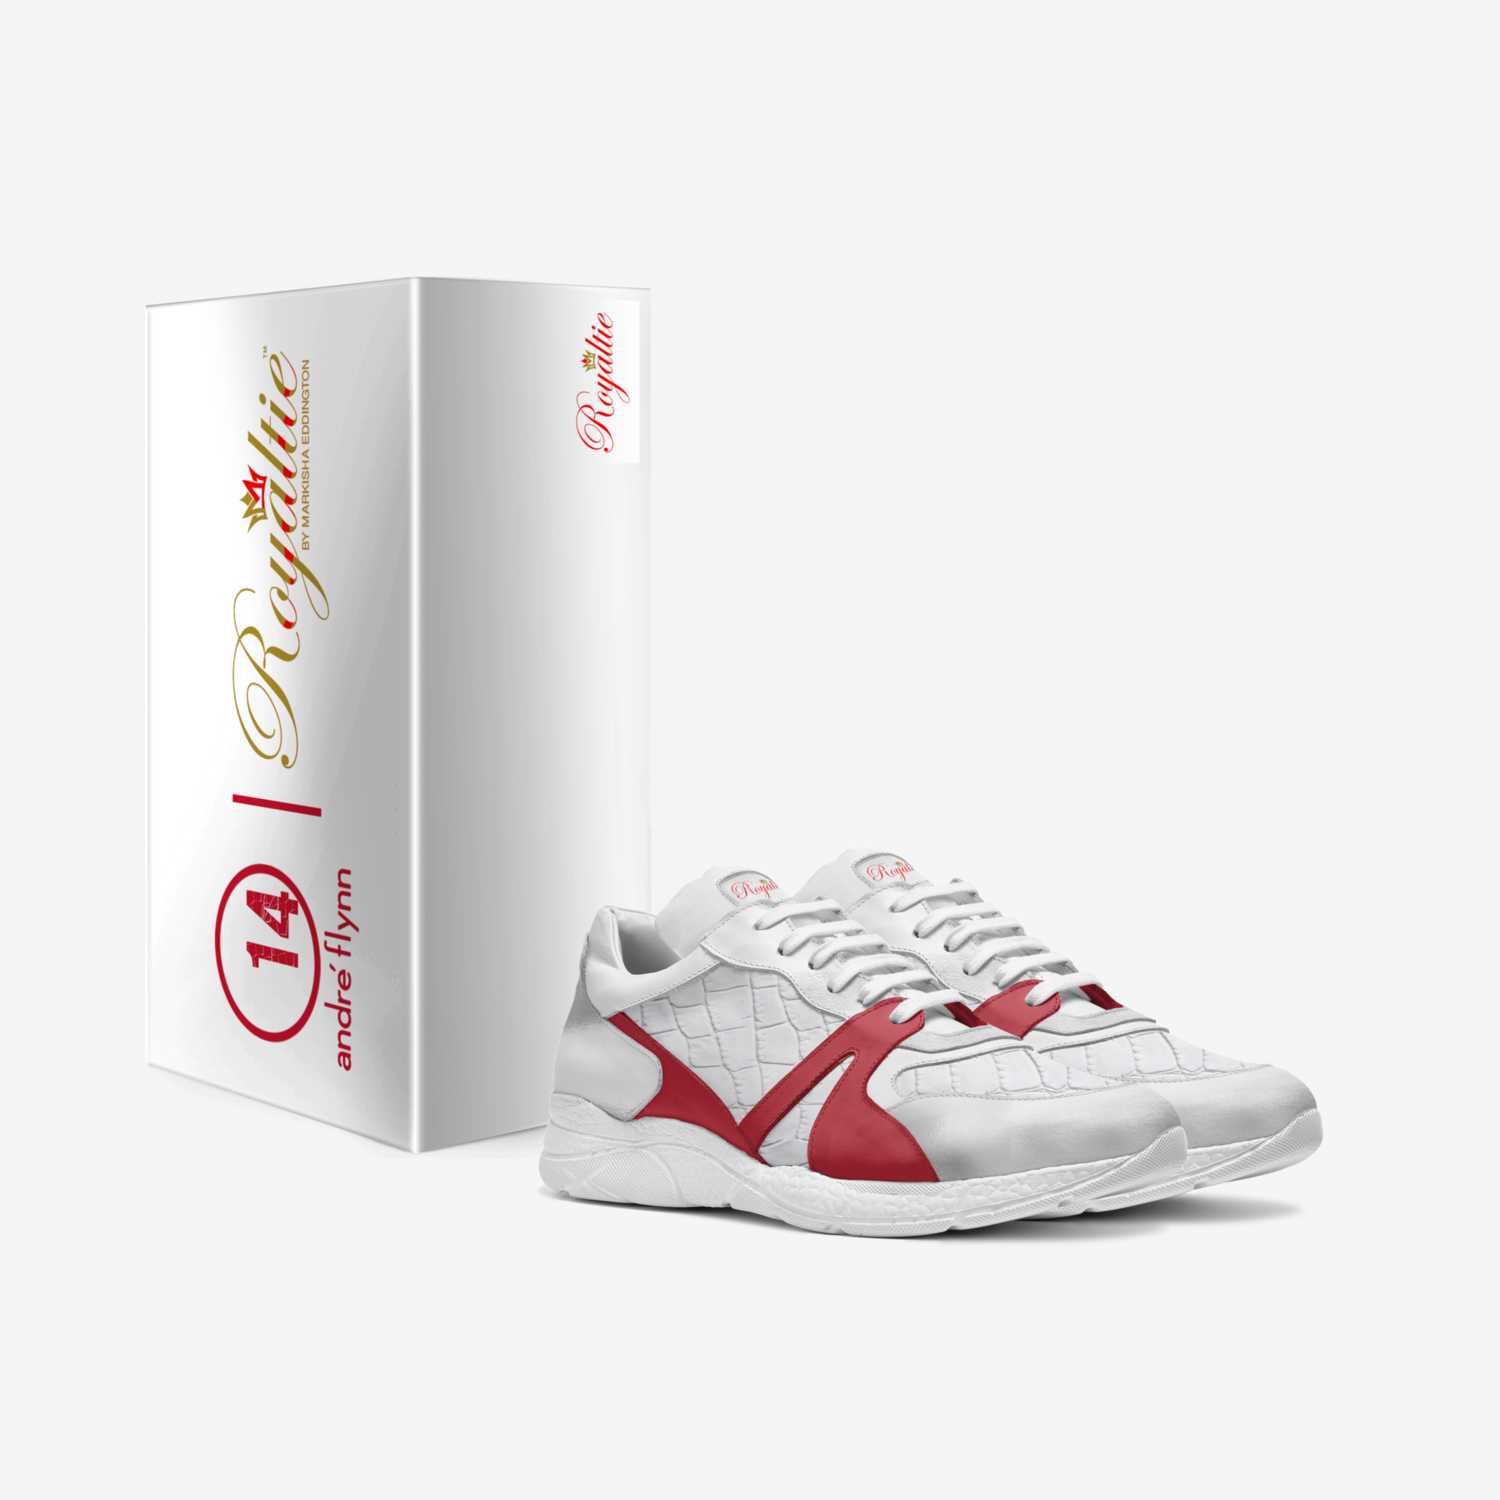 ANDRE FLYNN 14 custom made in Italy shoes by Markisha Eddington | Box view